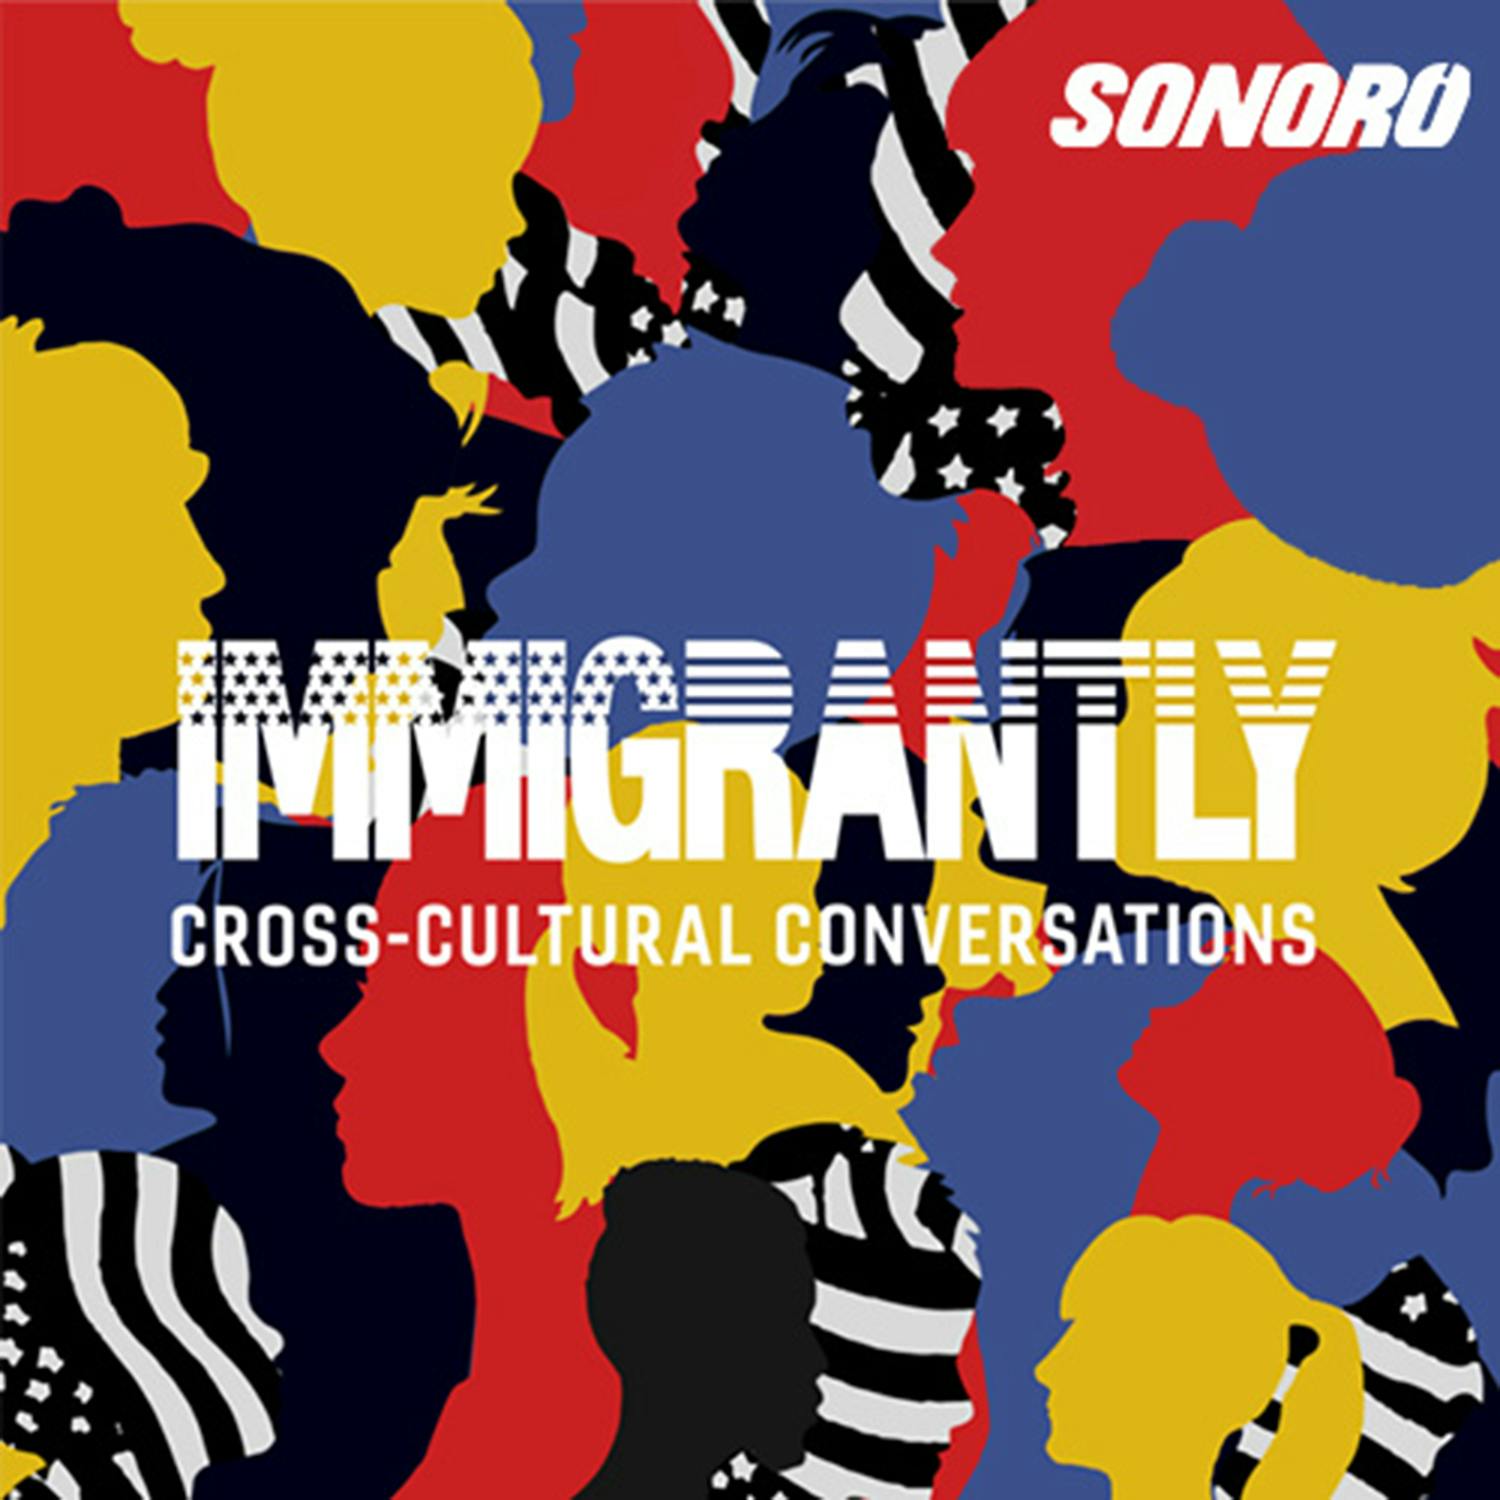 Immigrantly:Sonoro | Saadia Khan